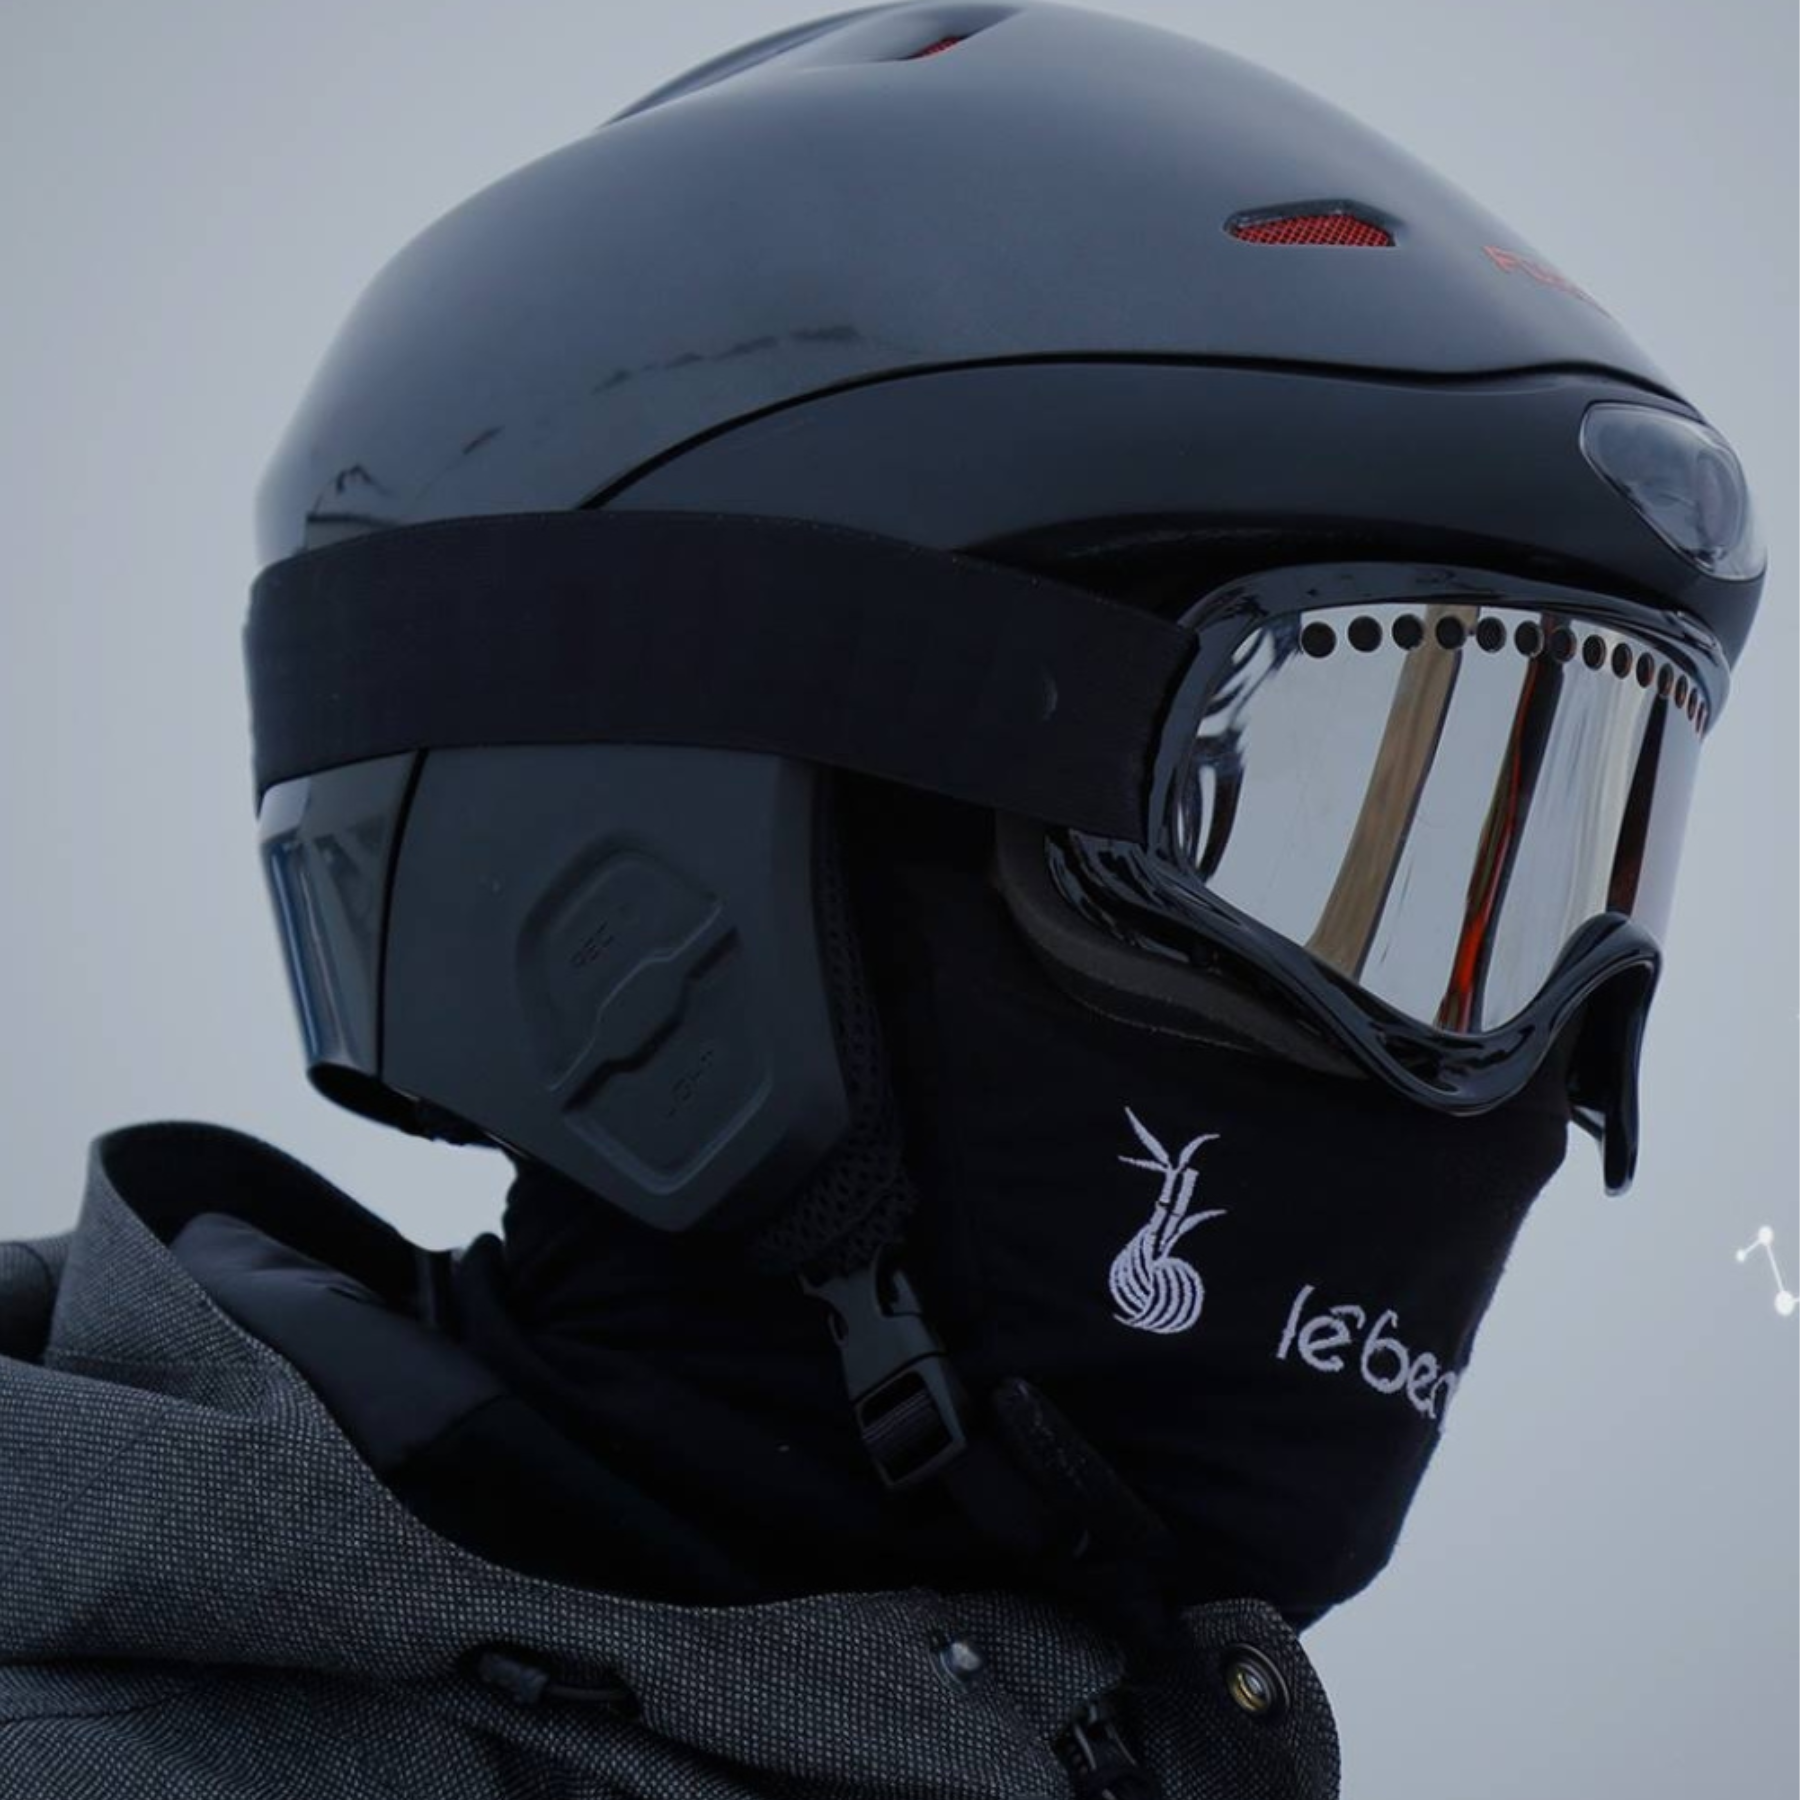 Side view snowboarder man wear black suit goggles mask hat ski